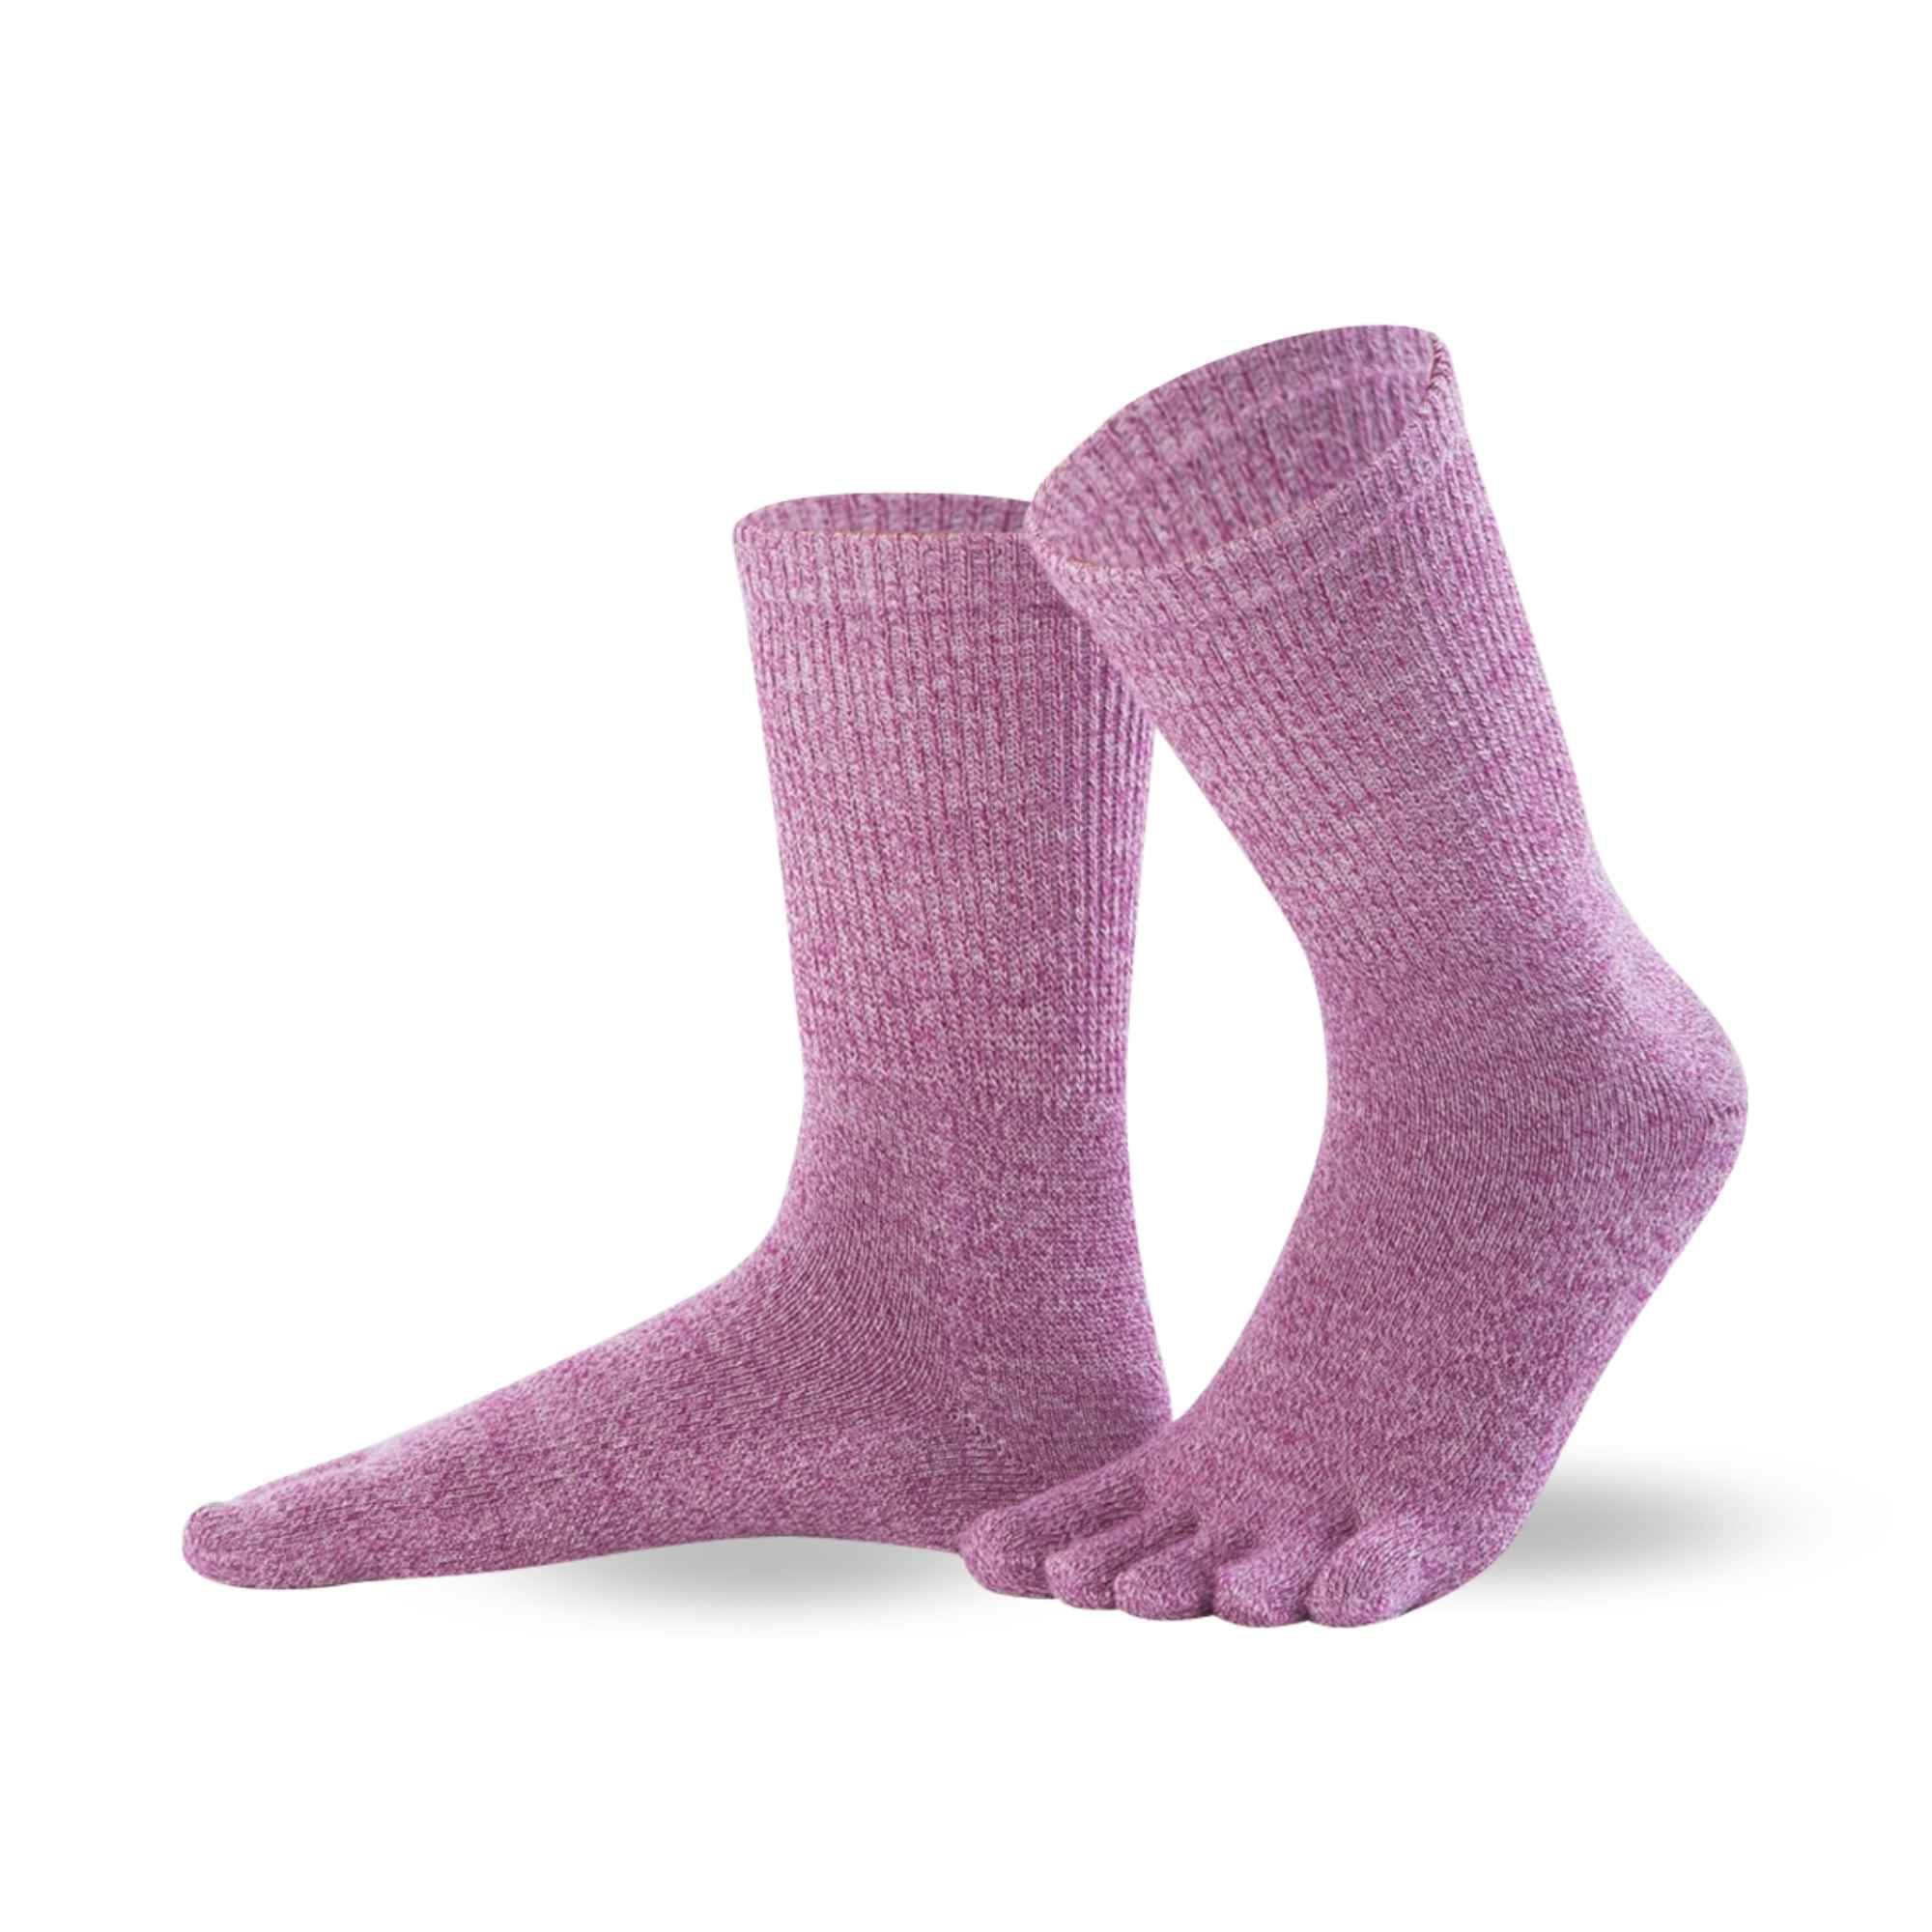 Knitido Merino Optimo toe socks made from merino wool - Knitido®